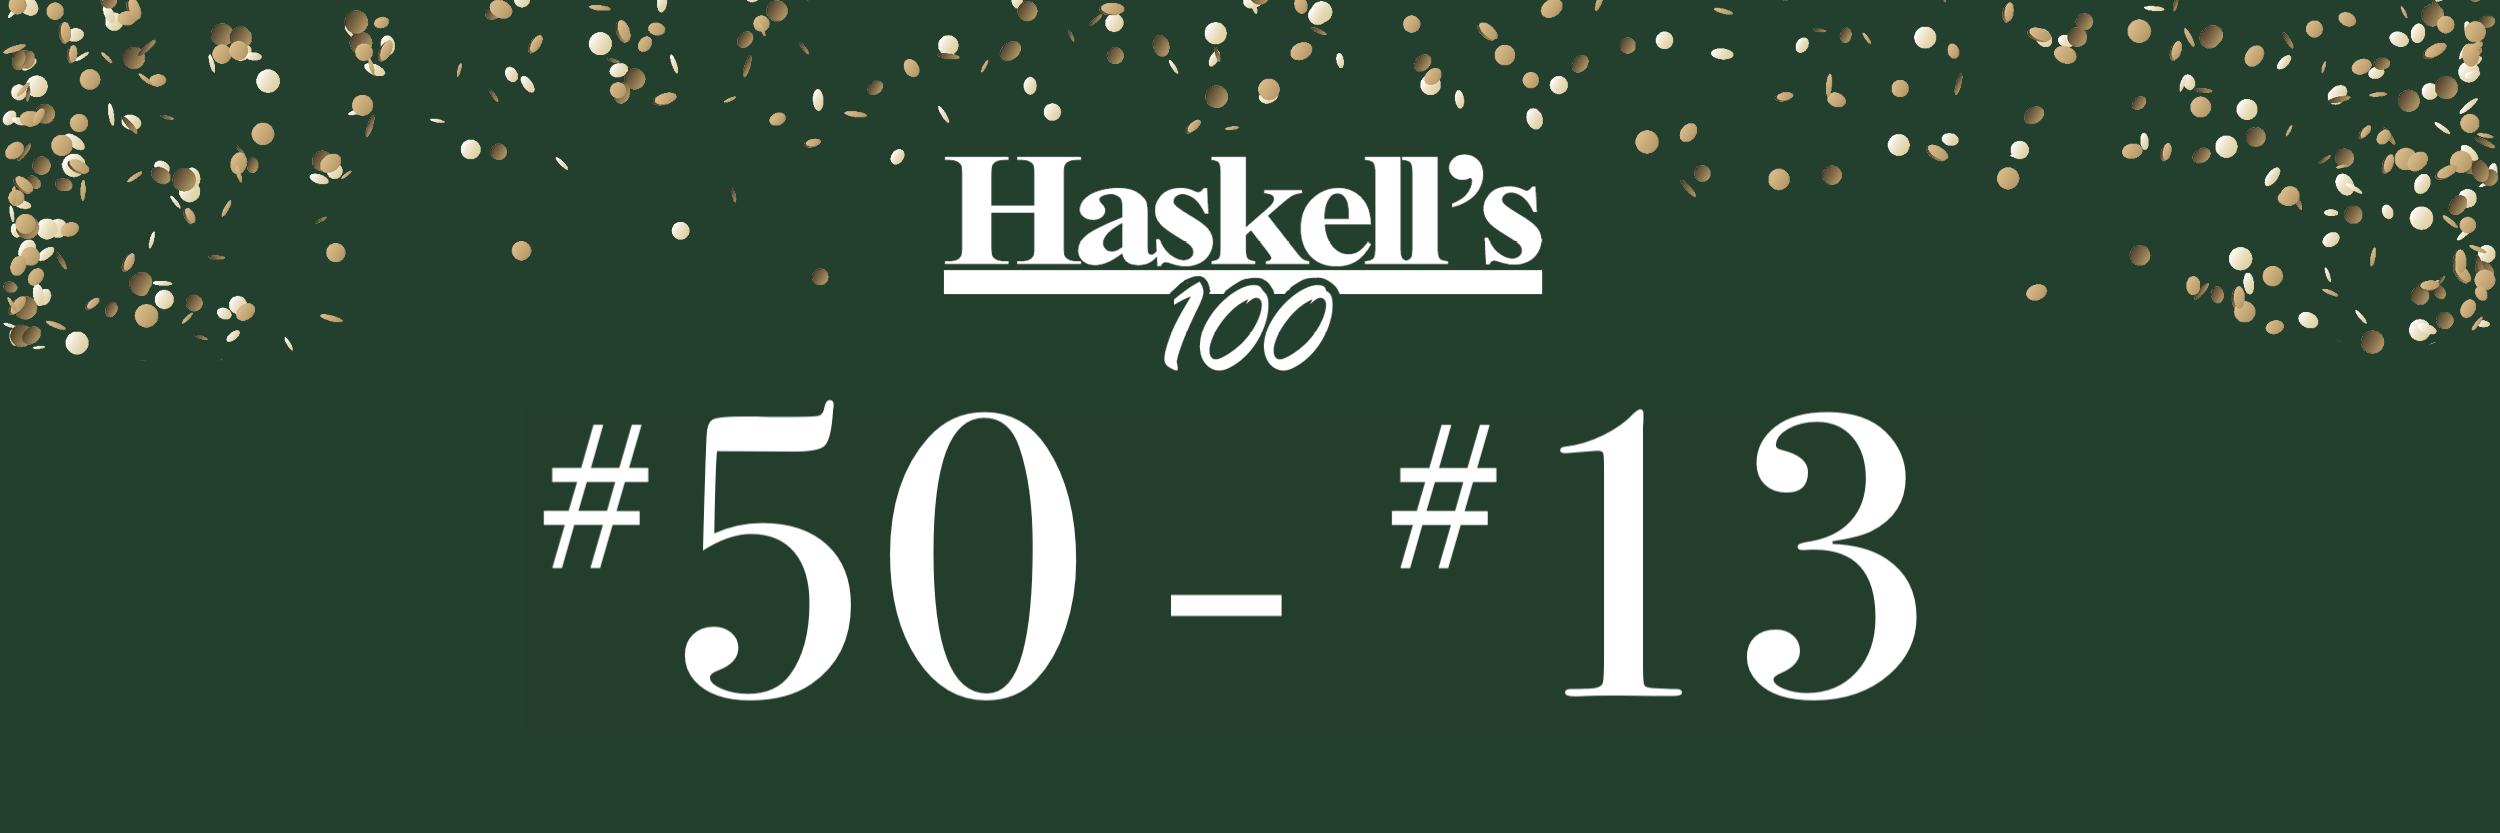 Haskells 100 LP banner 50-13_2021web